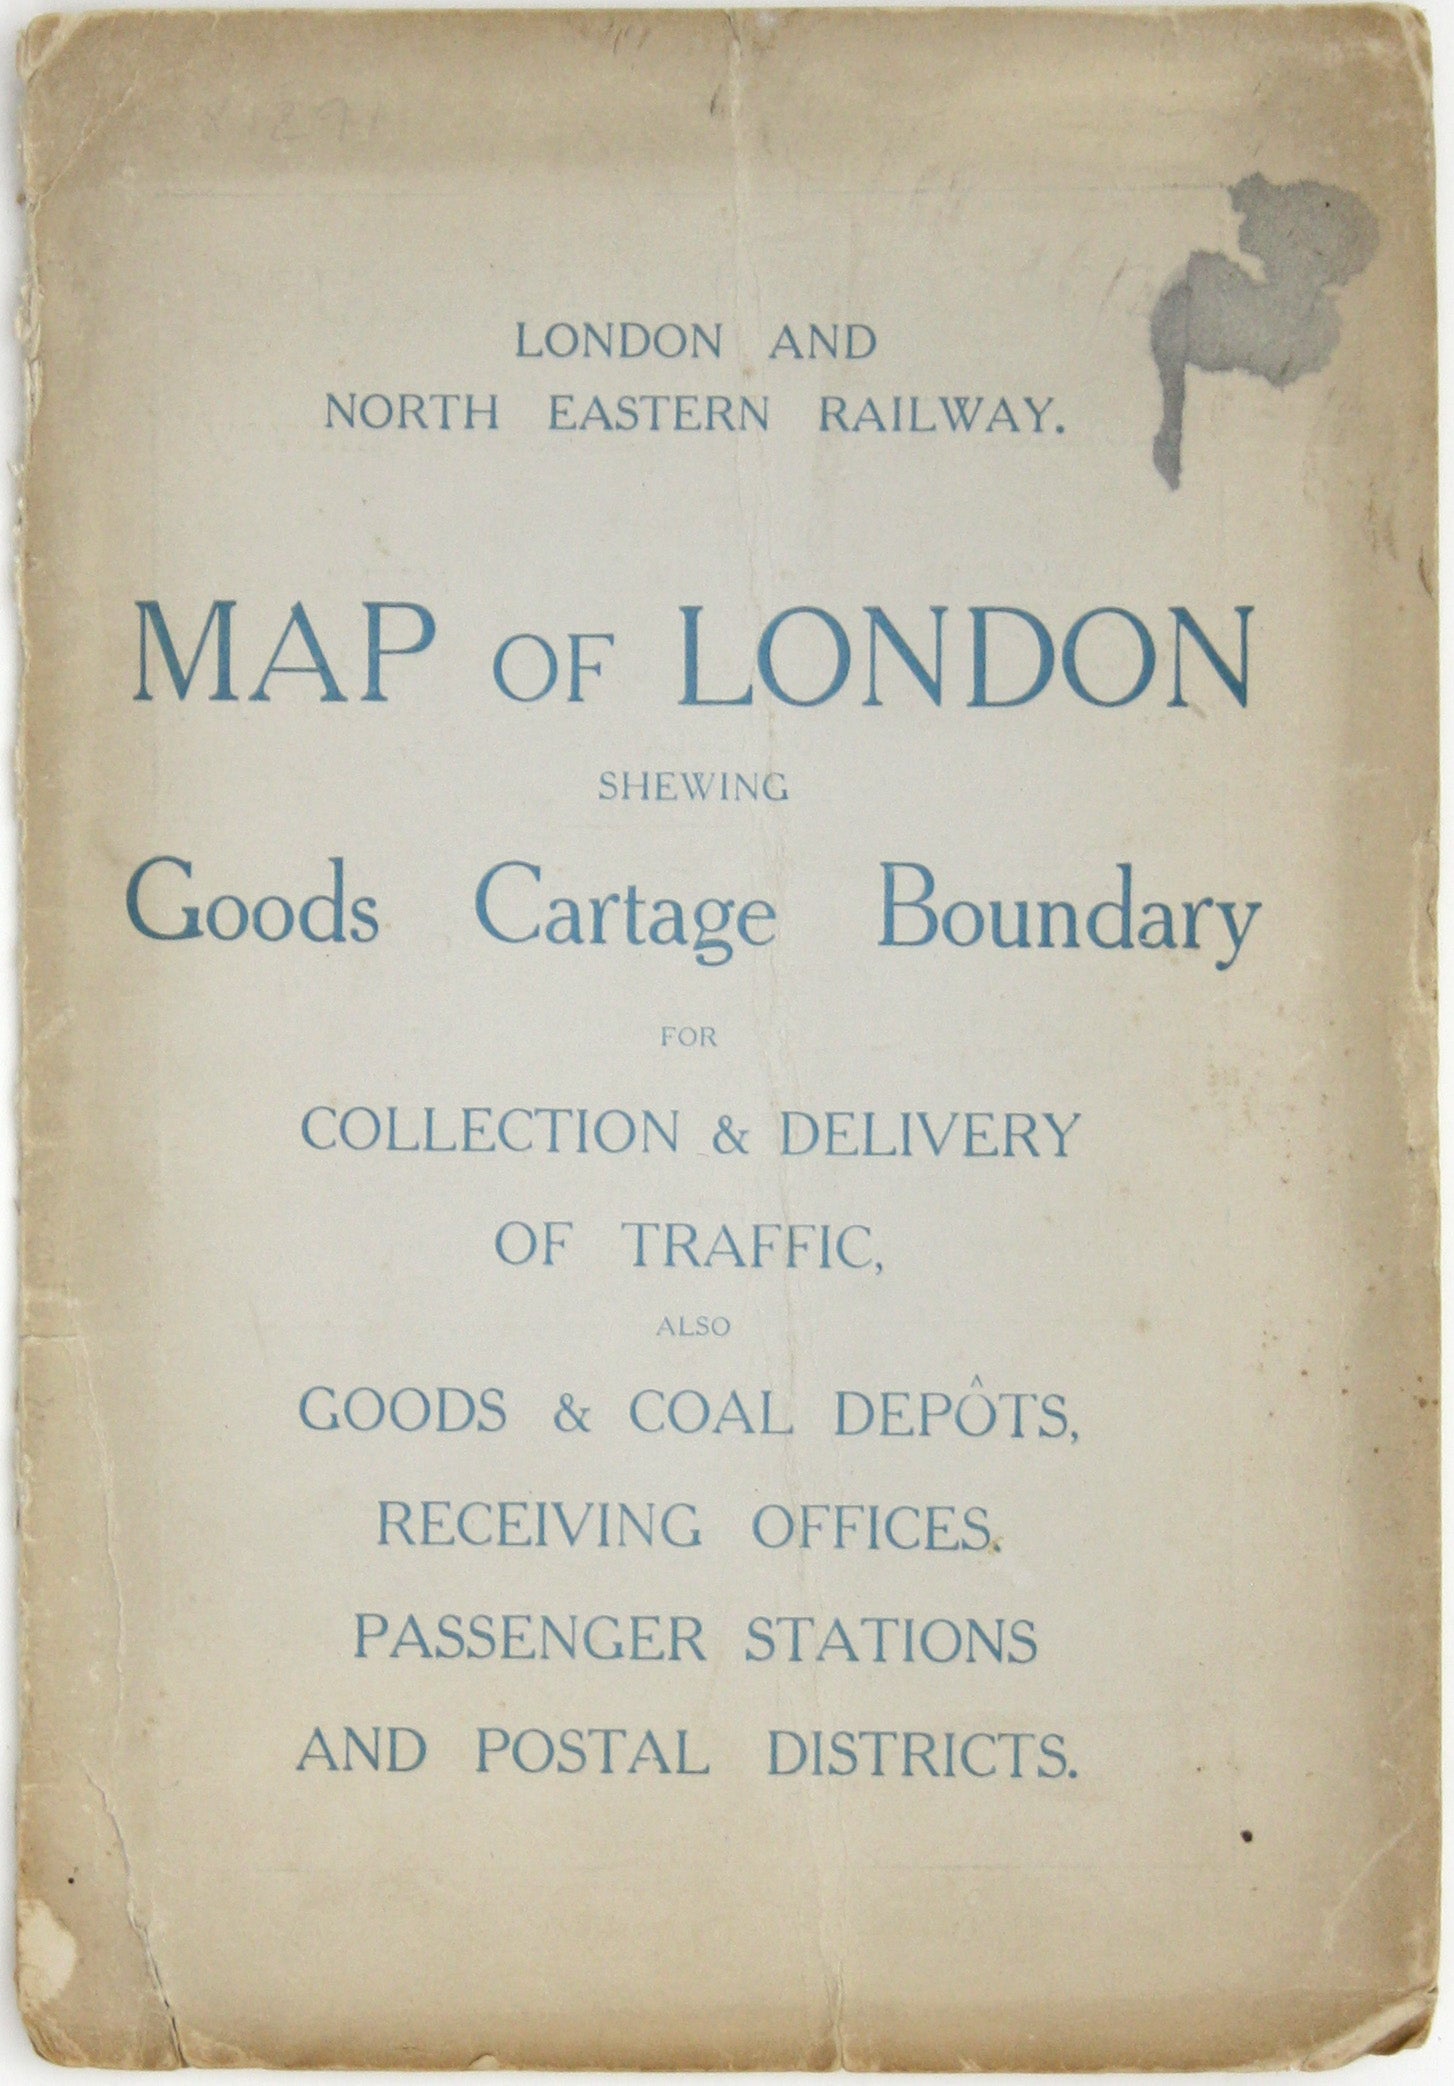 LNER Cartage Boundary Map